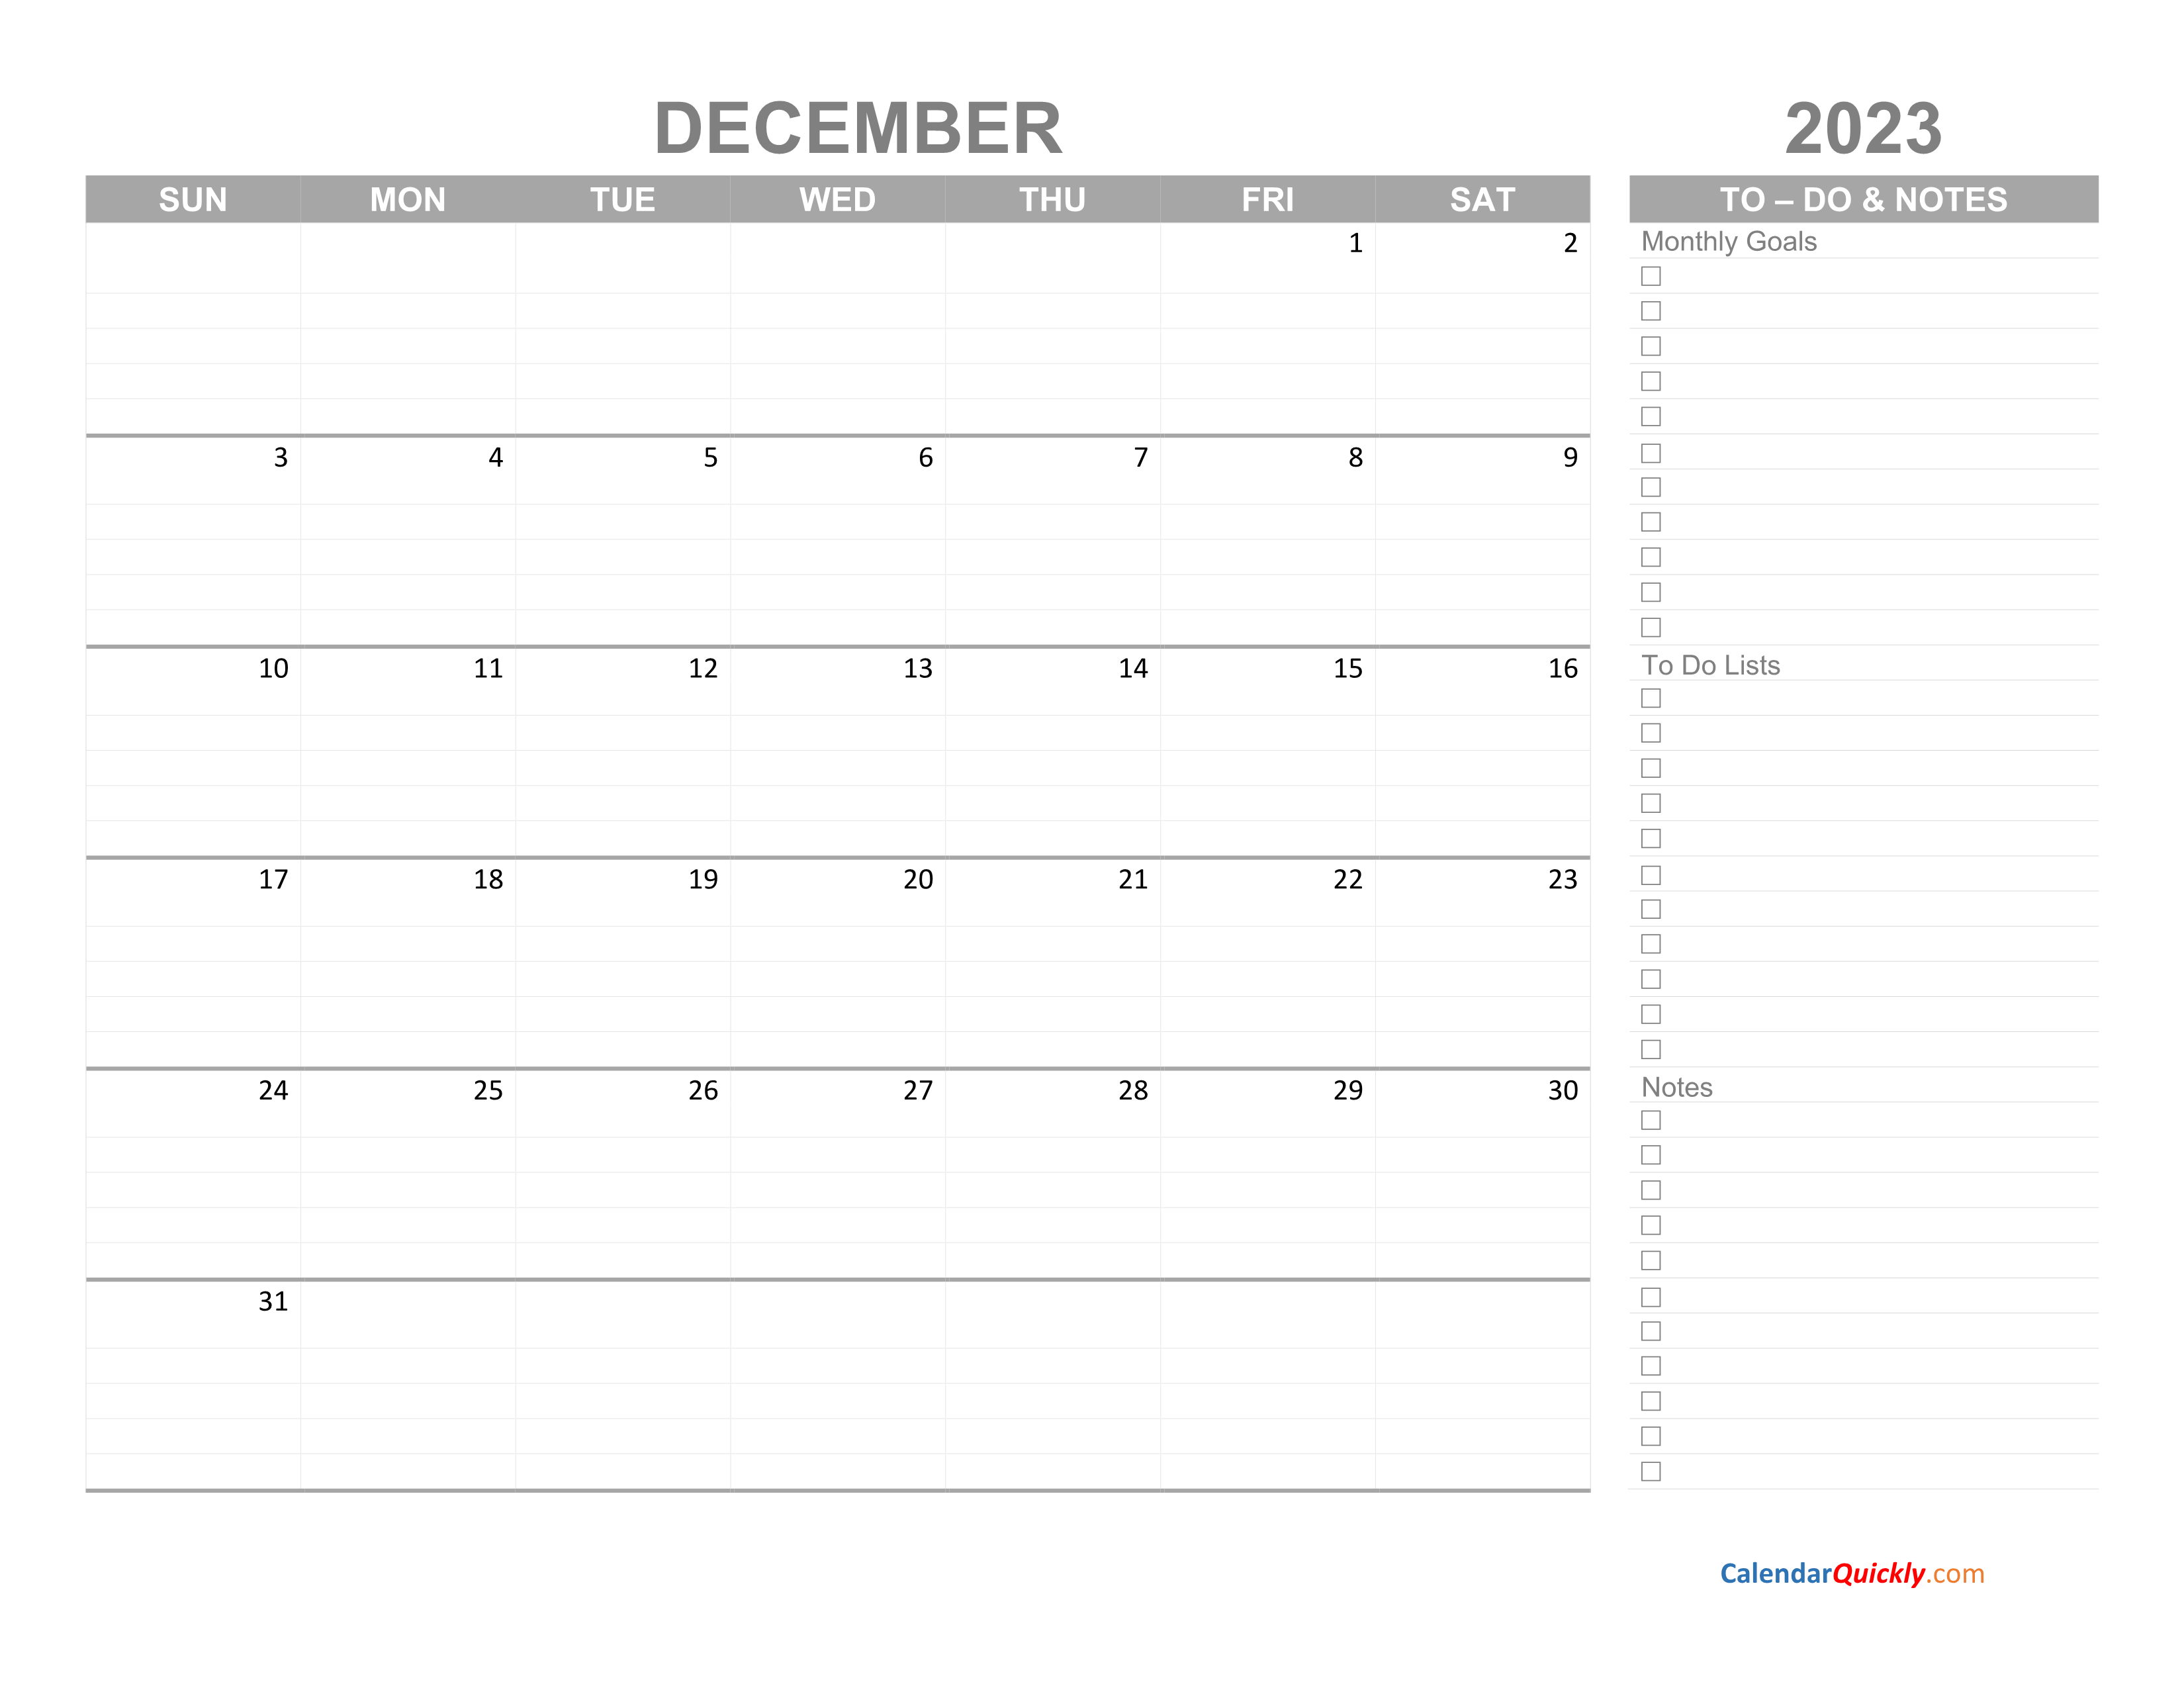 December 2023 Calendar with ToDo List Calendar Quickly